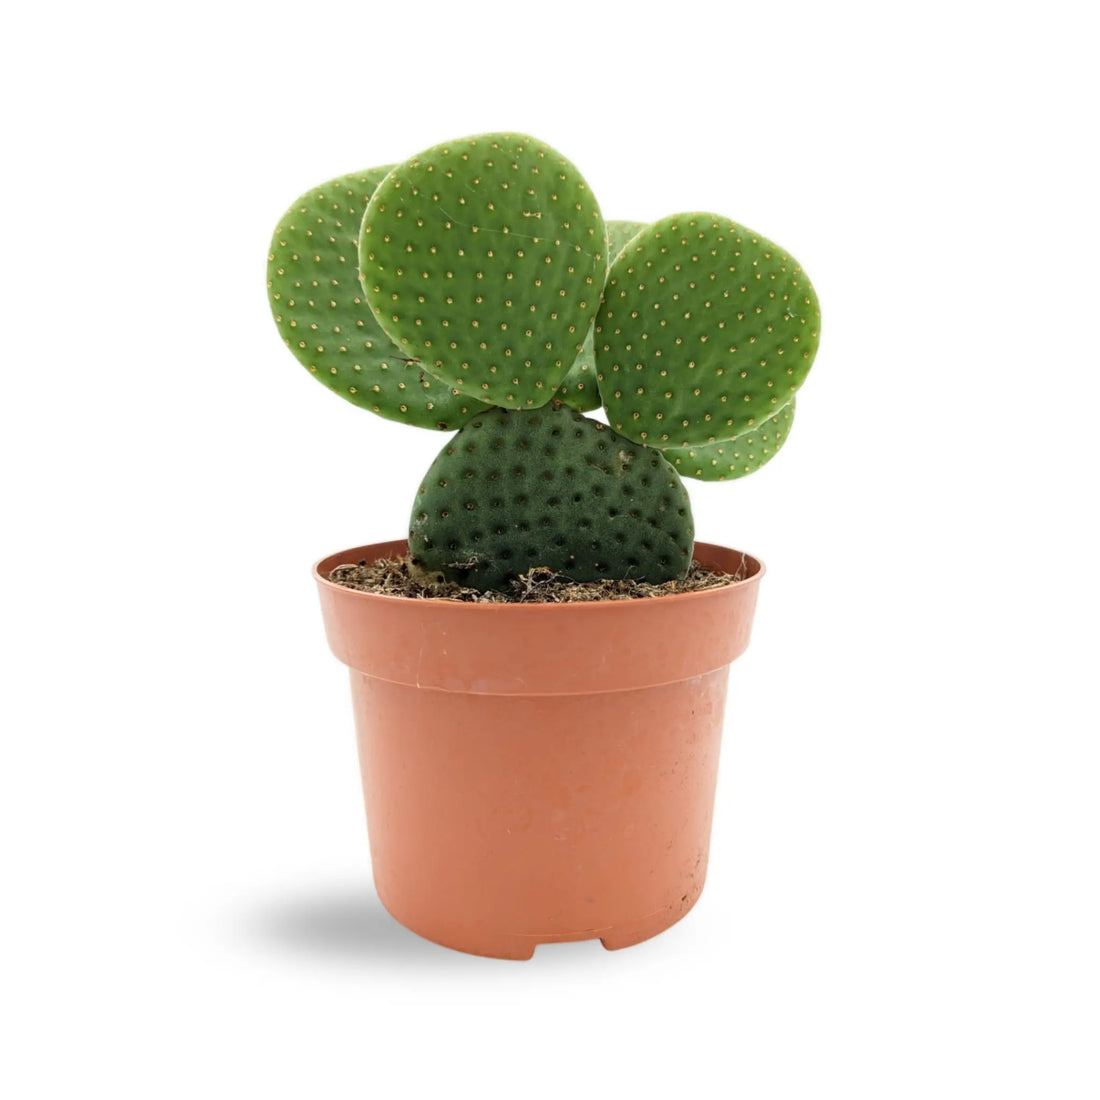 Opuntia Micro Inermis - Bunny Ear Cactus Leaf Culture